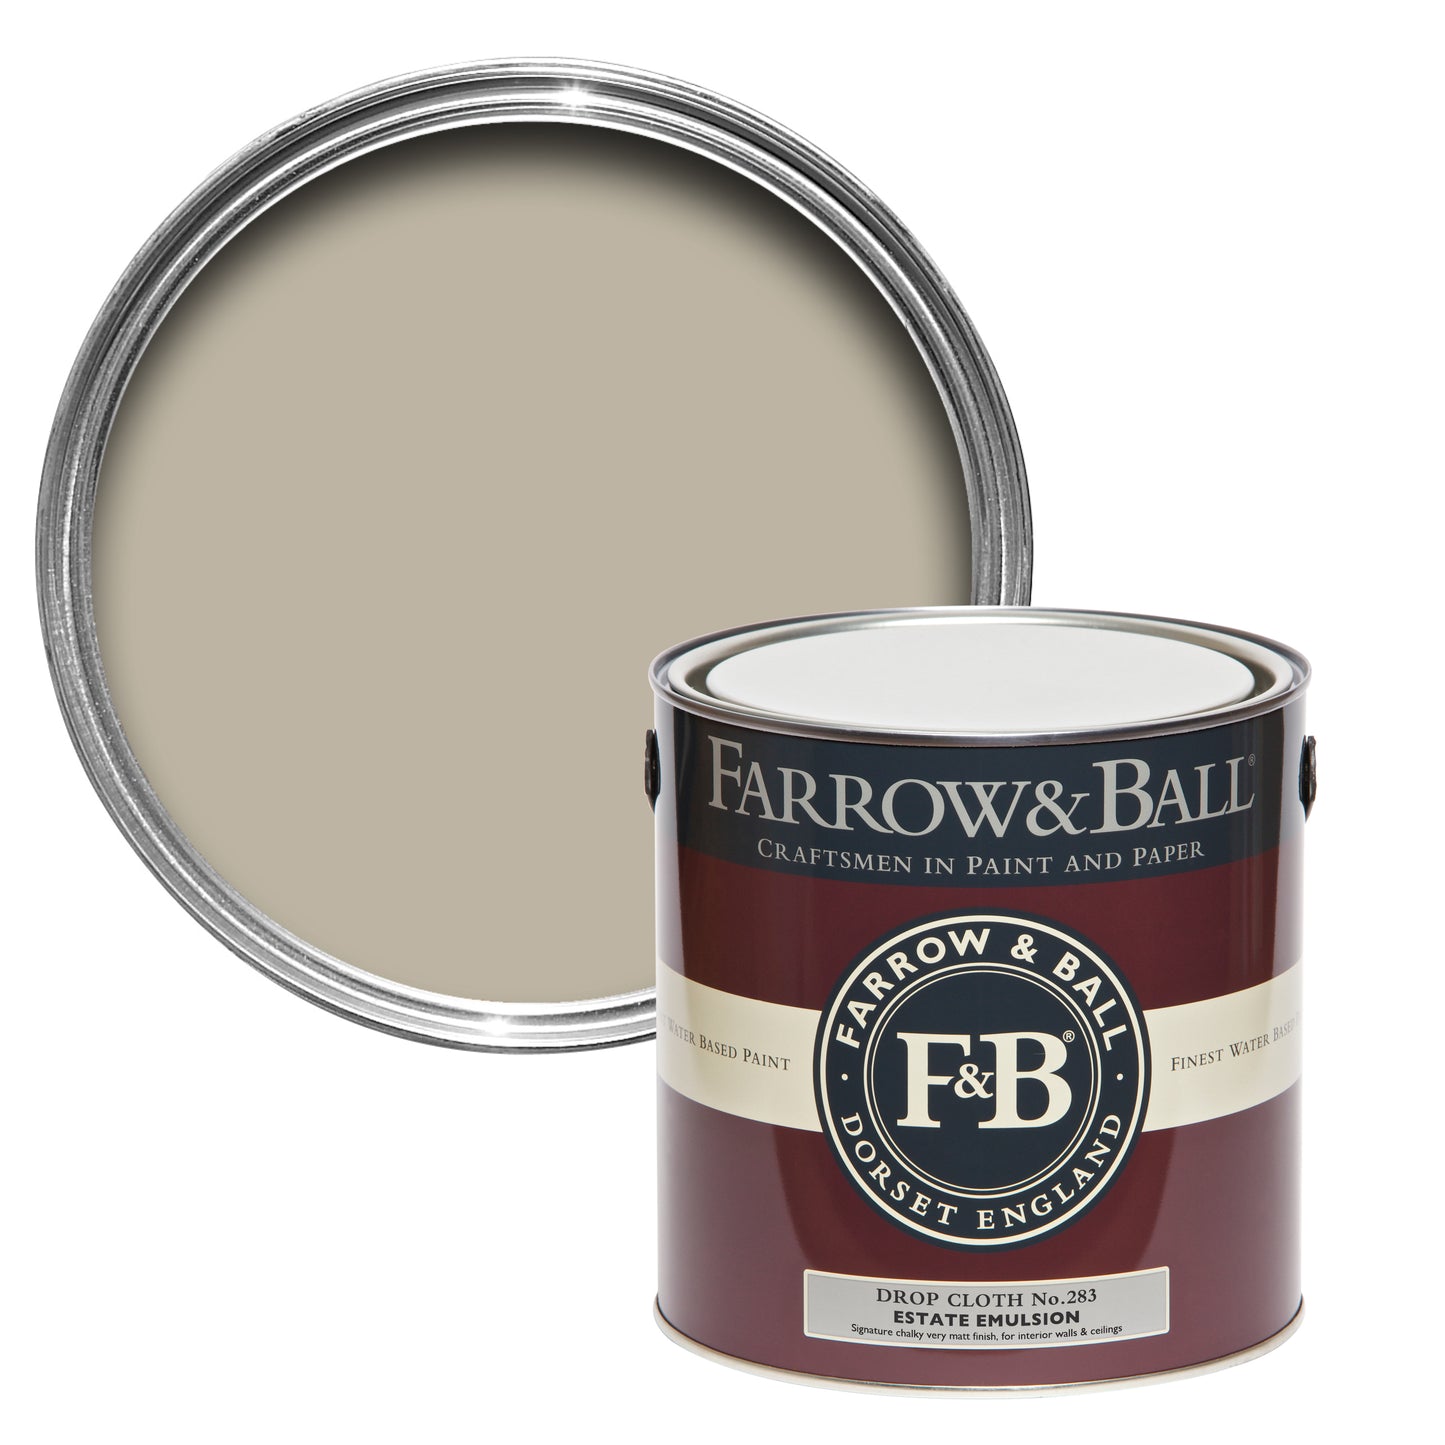 Wandfarbe - Farrow and Ball - Drop Cloth 283 - Emulsion